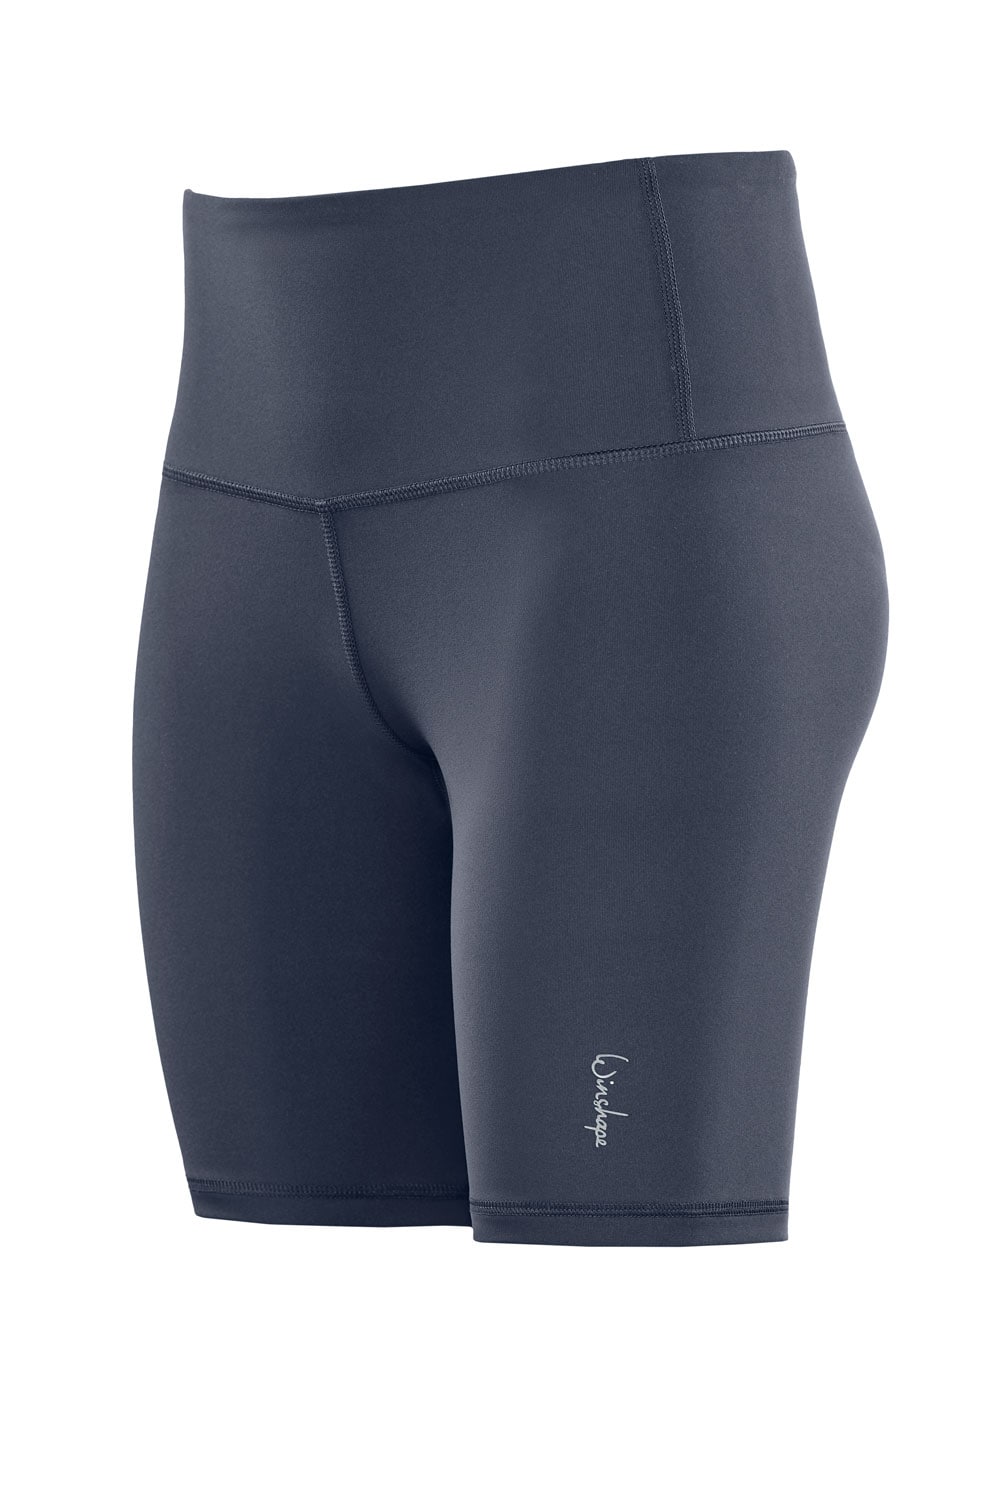 Winshape Shorts Comfort »Functional AEL412C«, Ultra ♕ weicher, bei Funktionsstoff elastischer